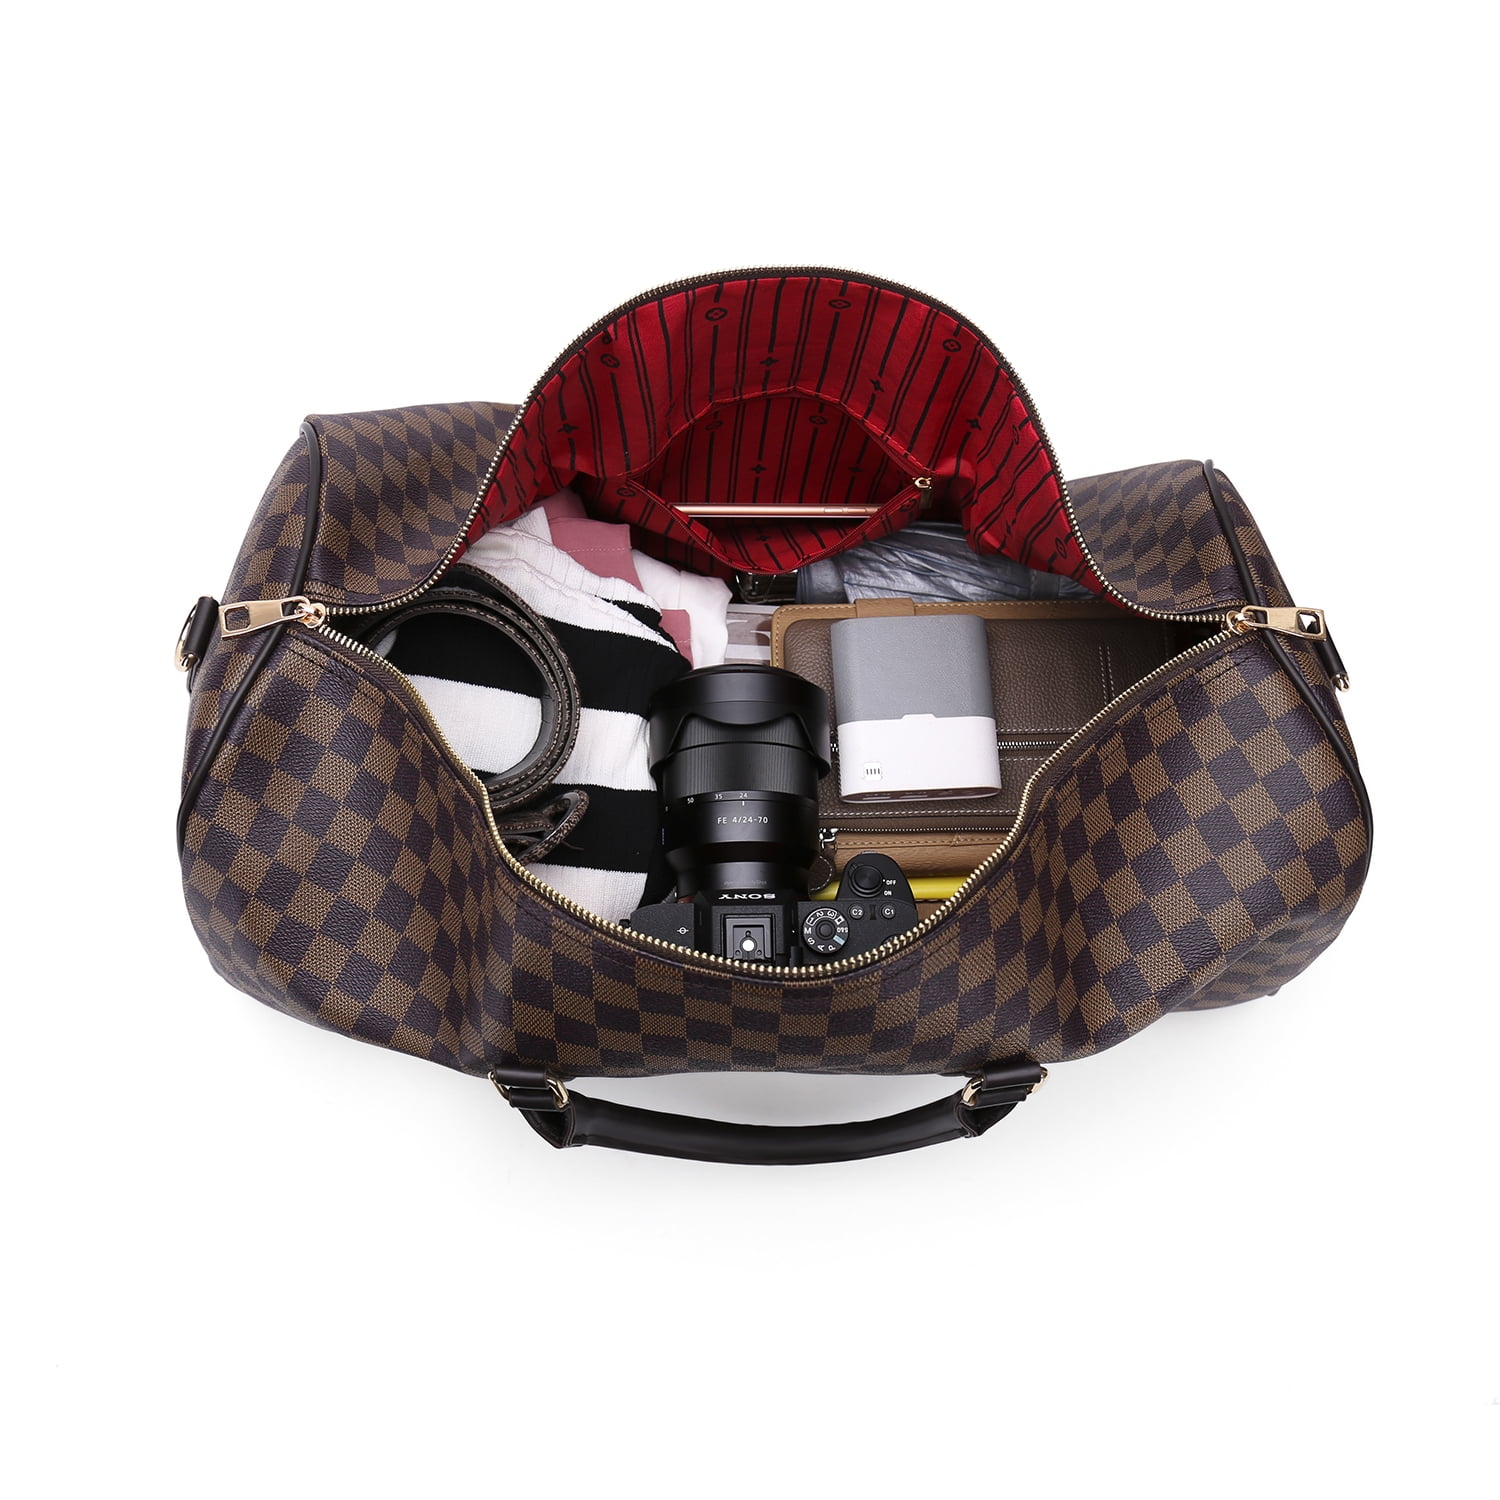 Skearow Fashion Checkered Duffle Bag,21L Luggage Bag,Travel Overnight  Weekender Bag,PU Vegan Leather Sport Gym Bag Brown Checkered Small  Size:18.11x10.24x10.63 